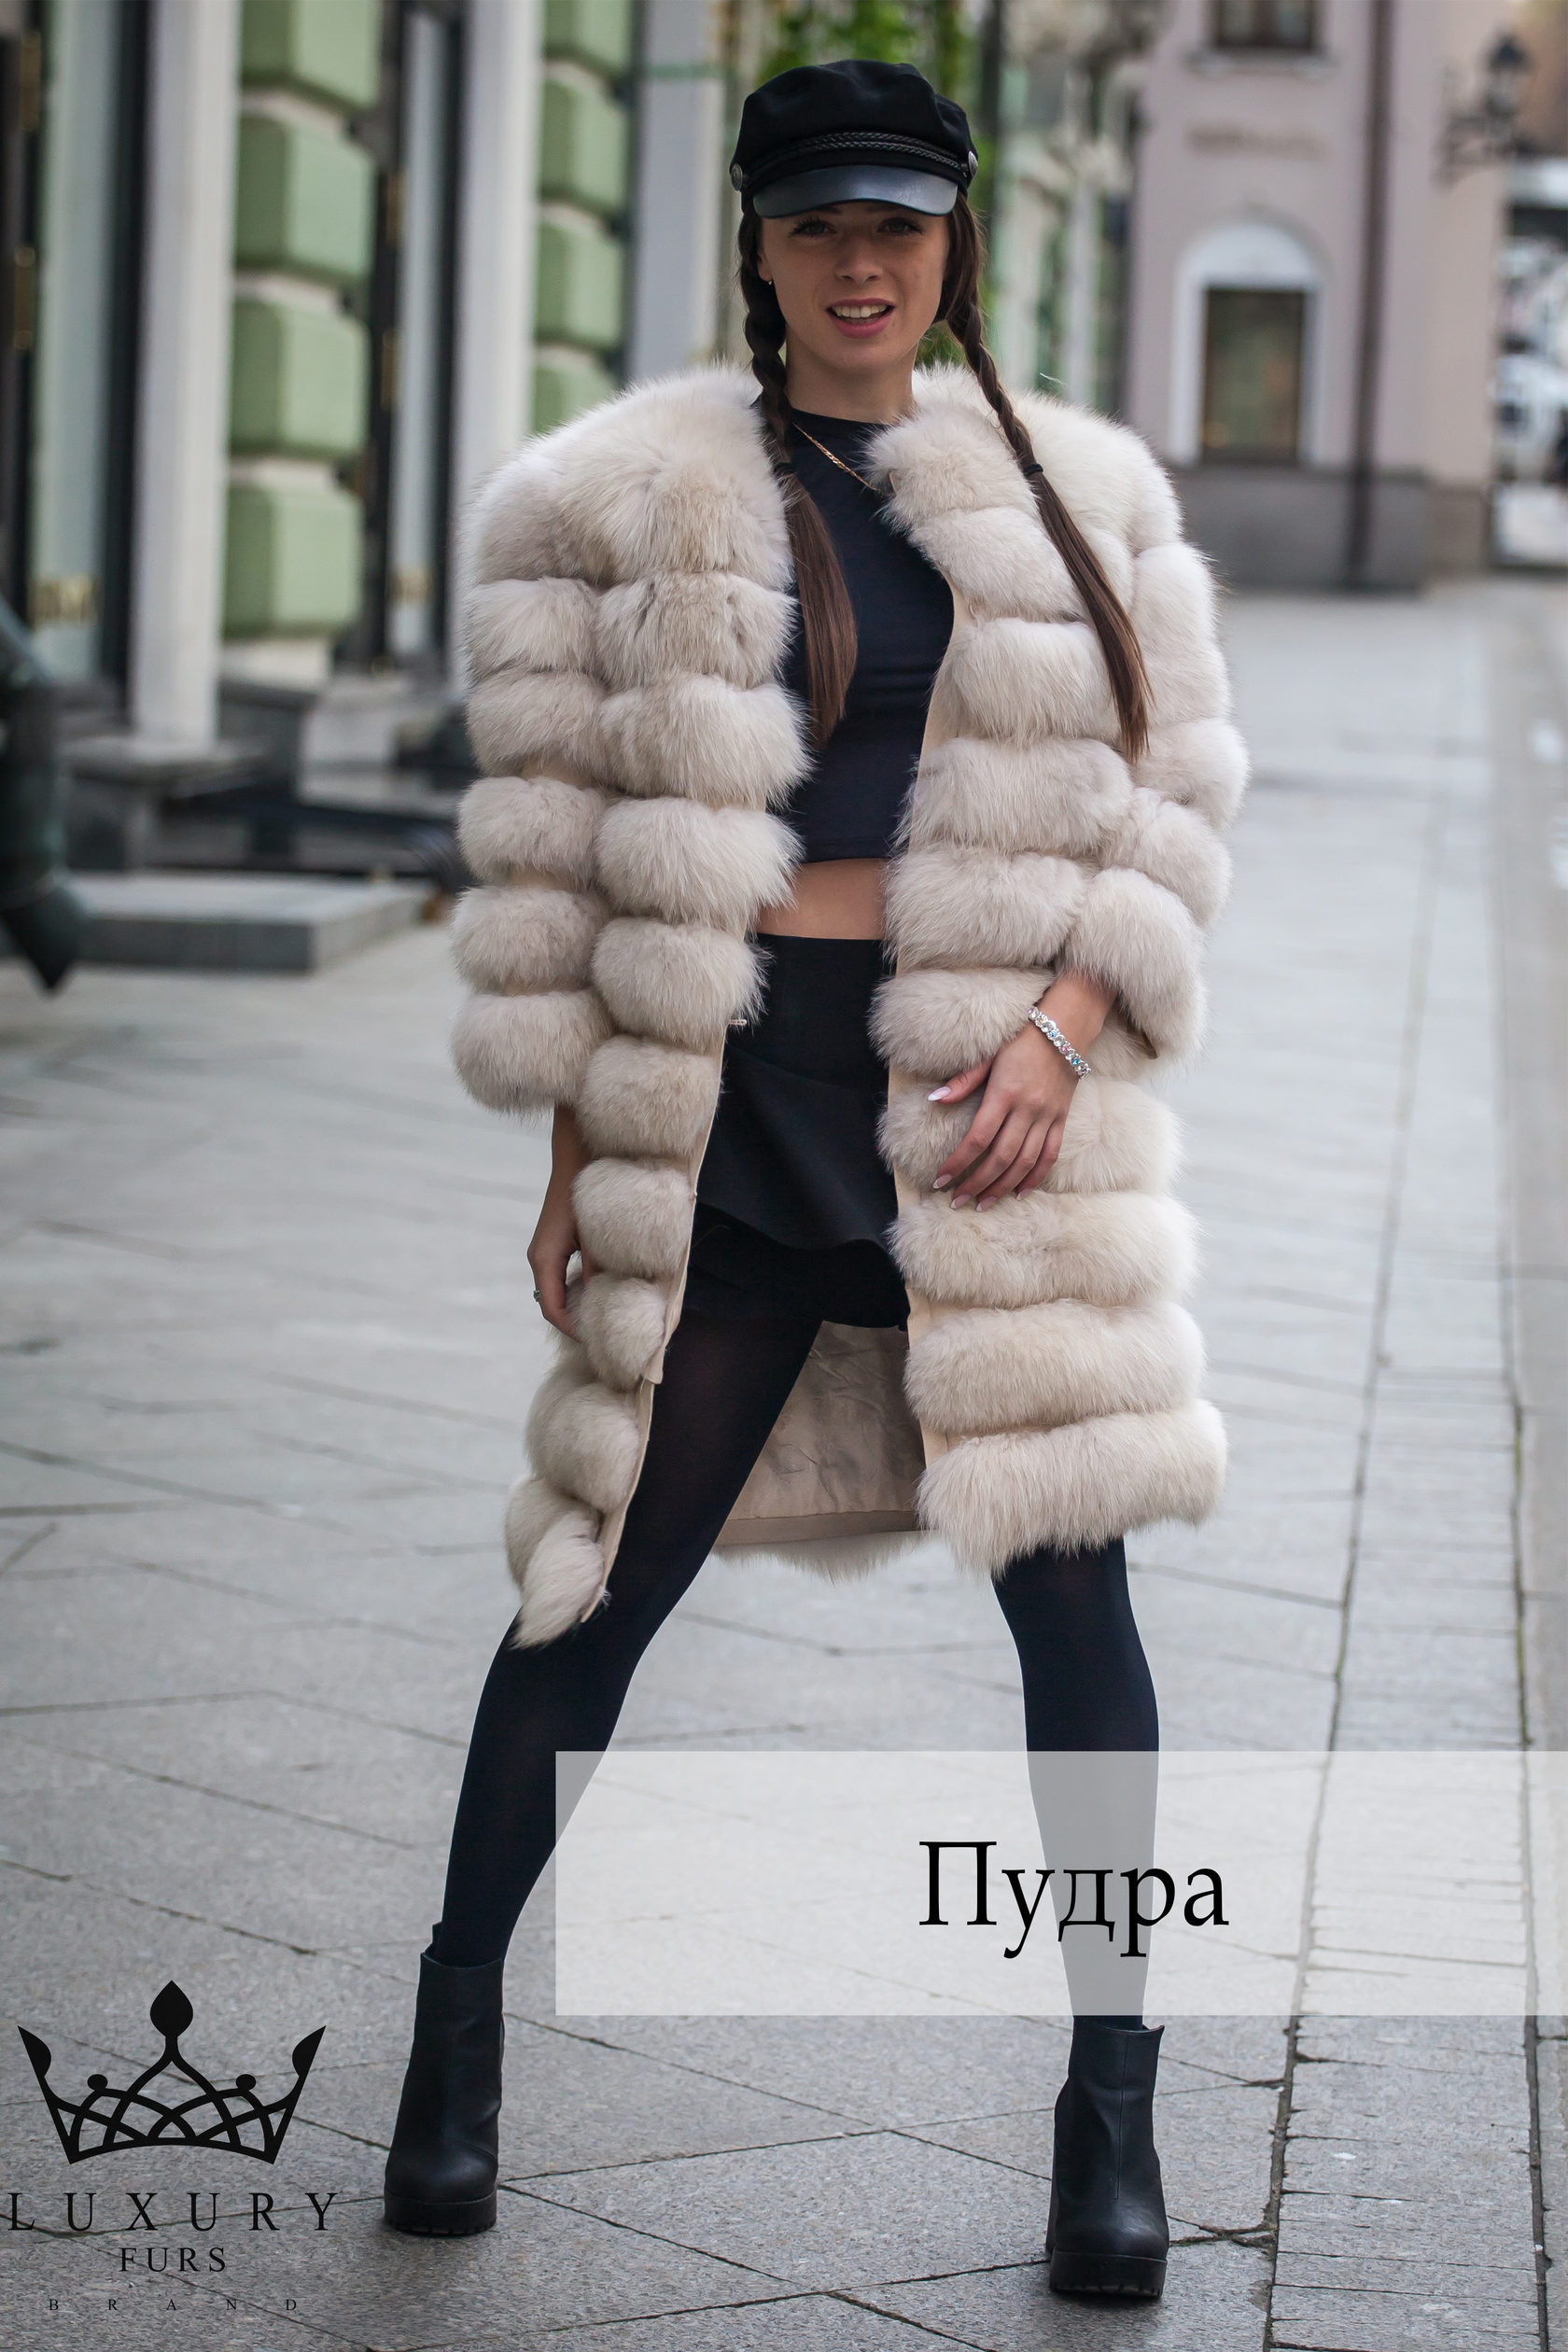 Luxury furs